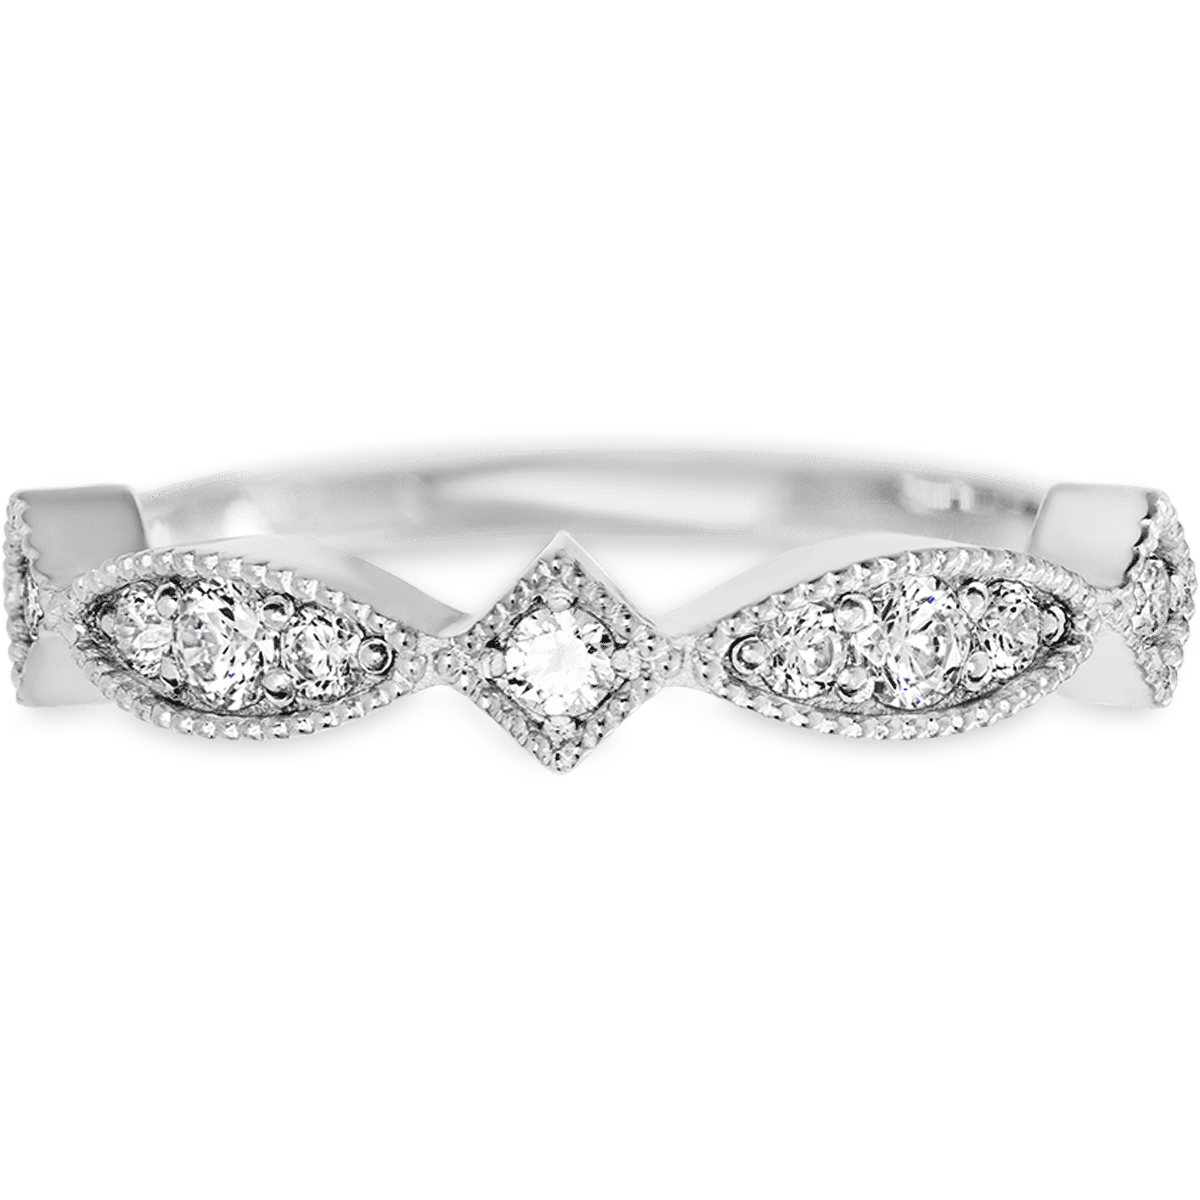 Ethereal 14k White Gold + White Diamonds Womens Wedding or Everyday Ring